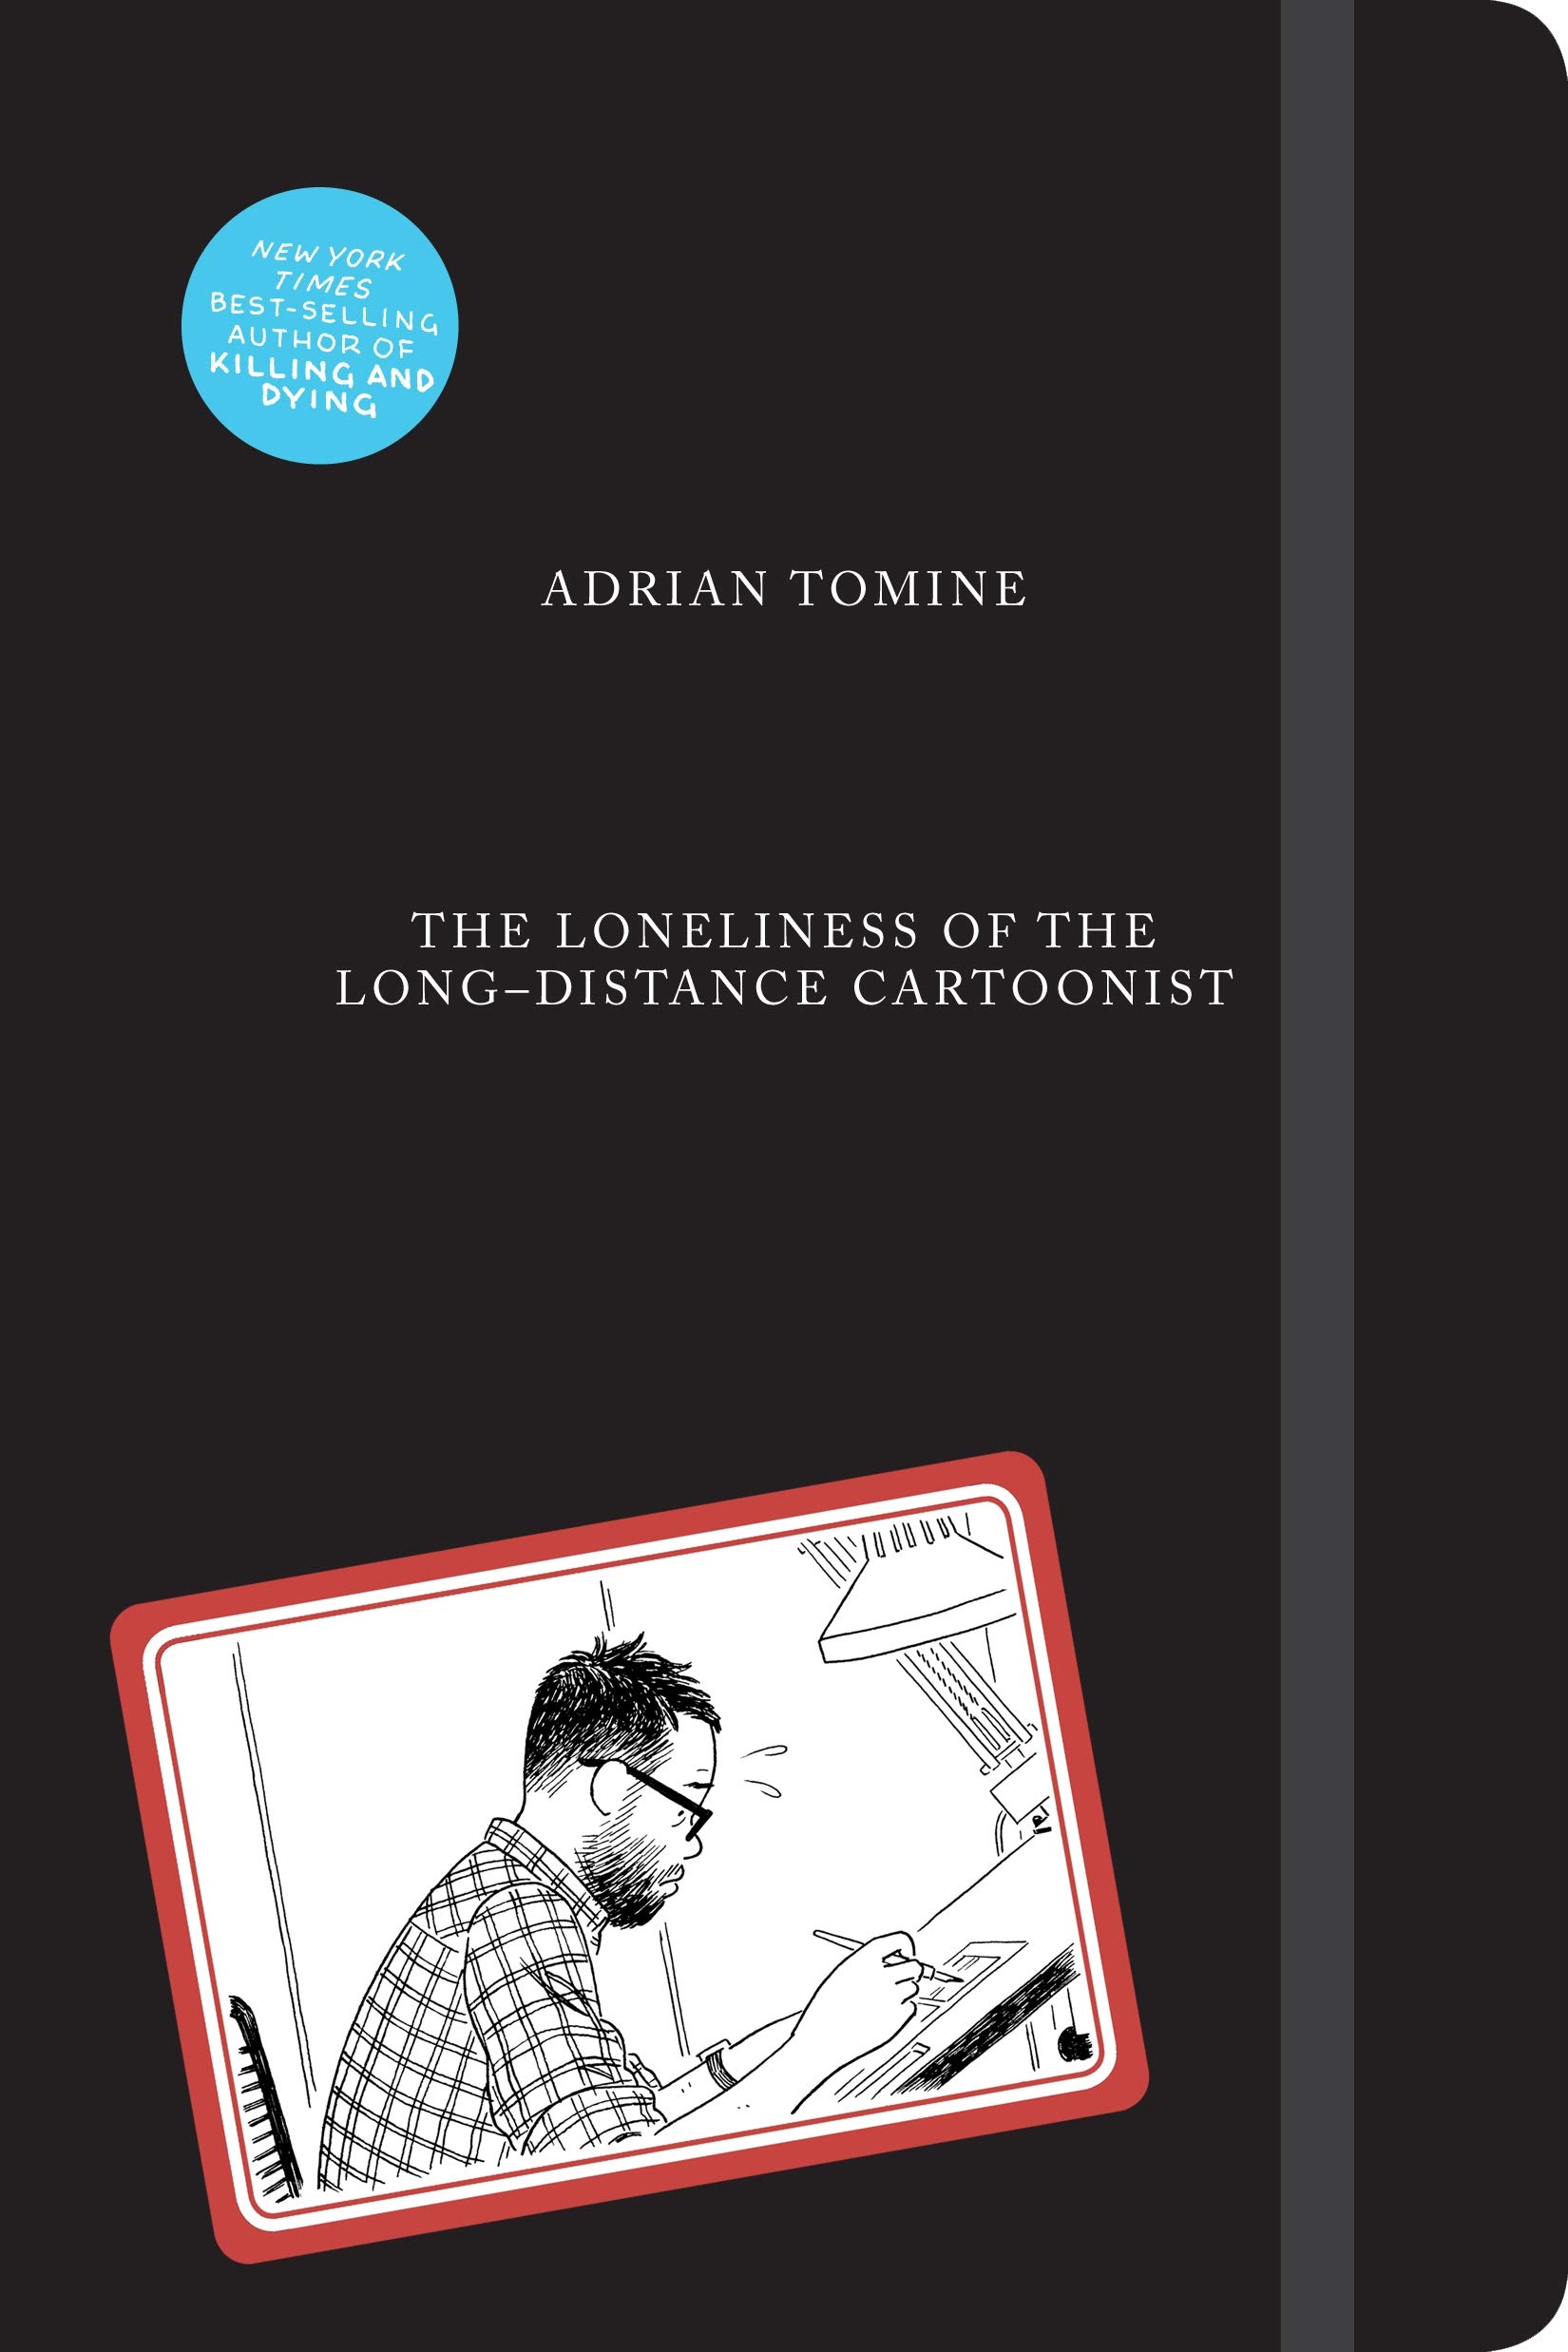 Эдриан Томайн «Одиночество комиксиста на длинной дистанции» (‘The Loneliness of the Long-Distance Cartoonist’)
